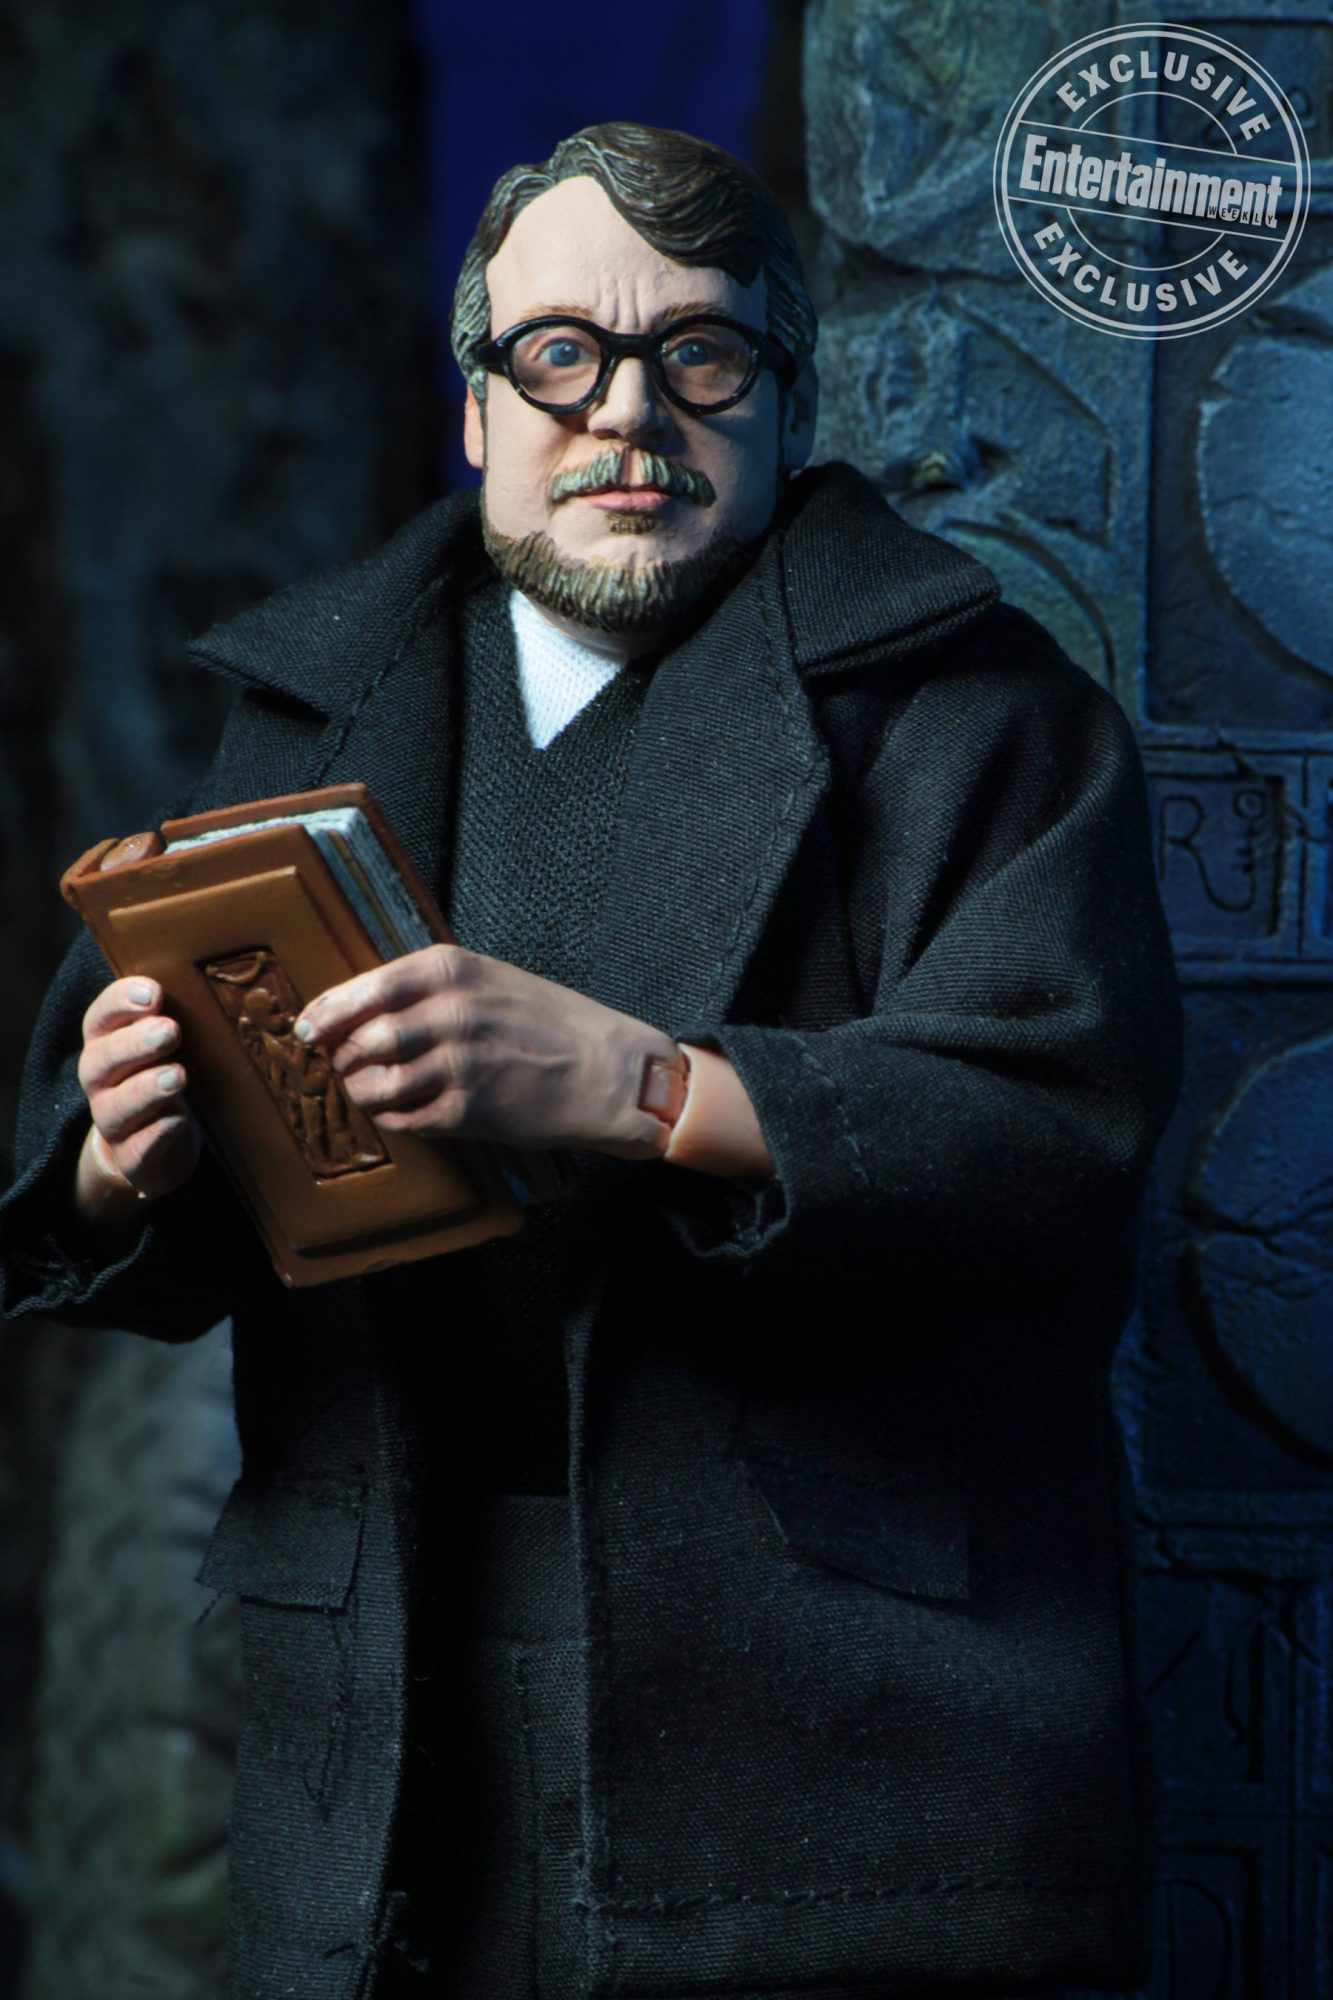 NECA's Guillermo del Toro action figures